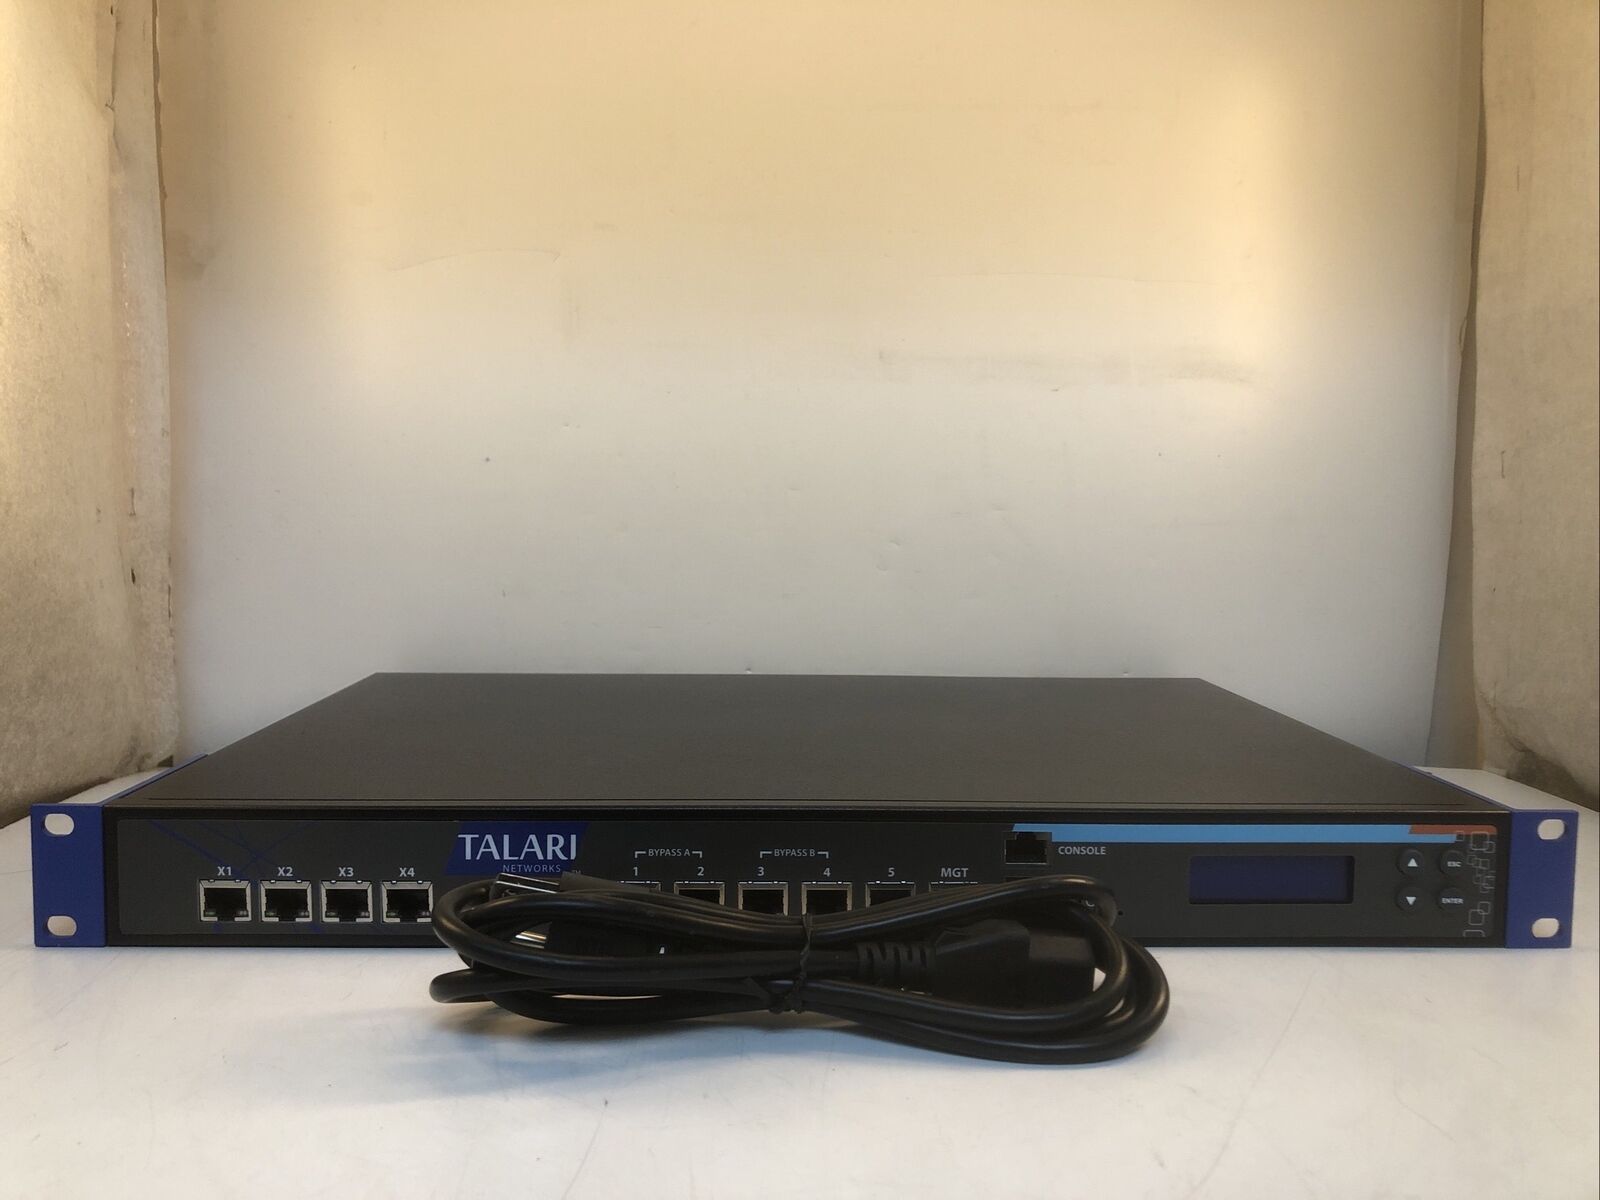 Talari Networks T730 Cloud SD-WAN Controller CAR-3000 w/ Power Cord